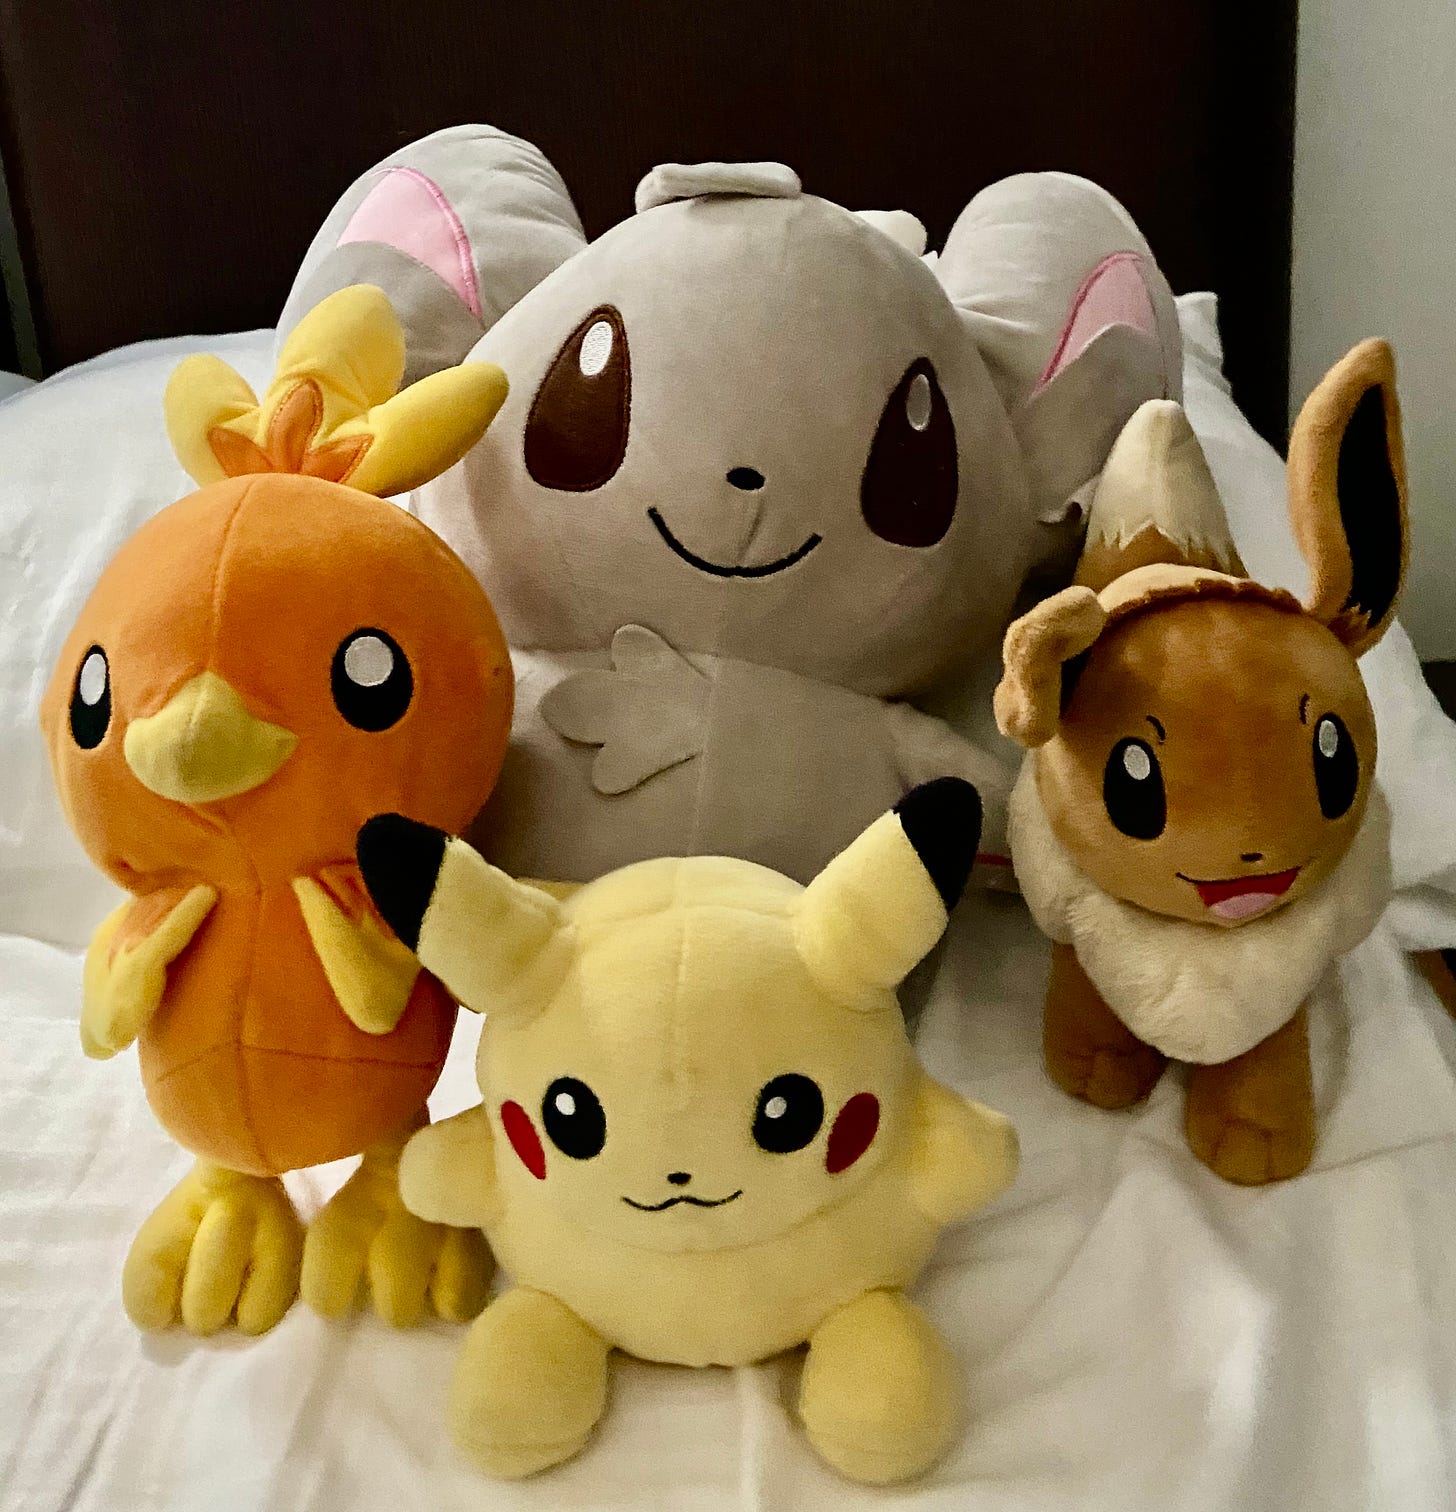 4 Pokemon character stuffed animals together